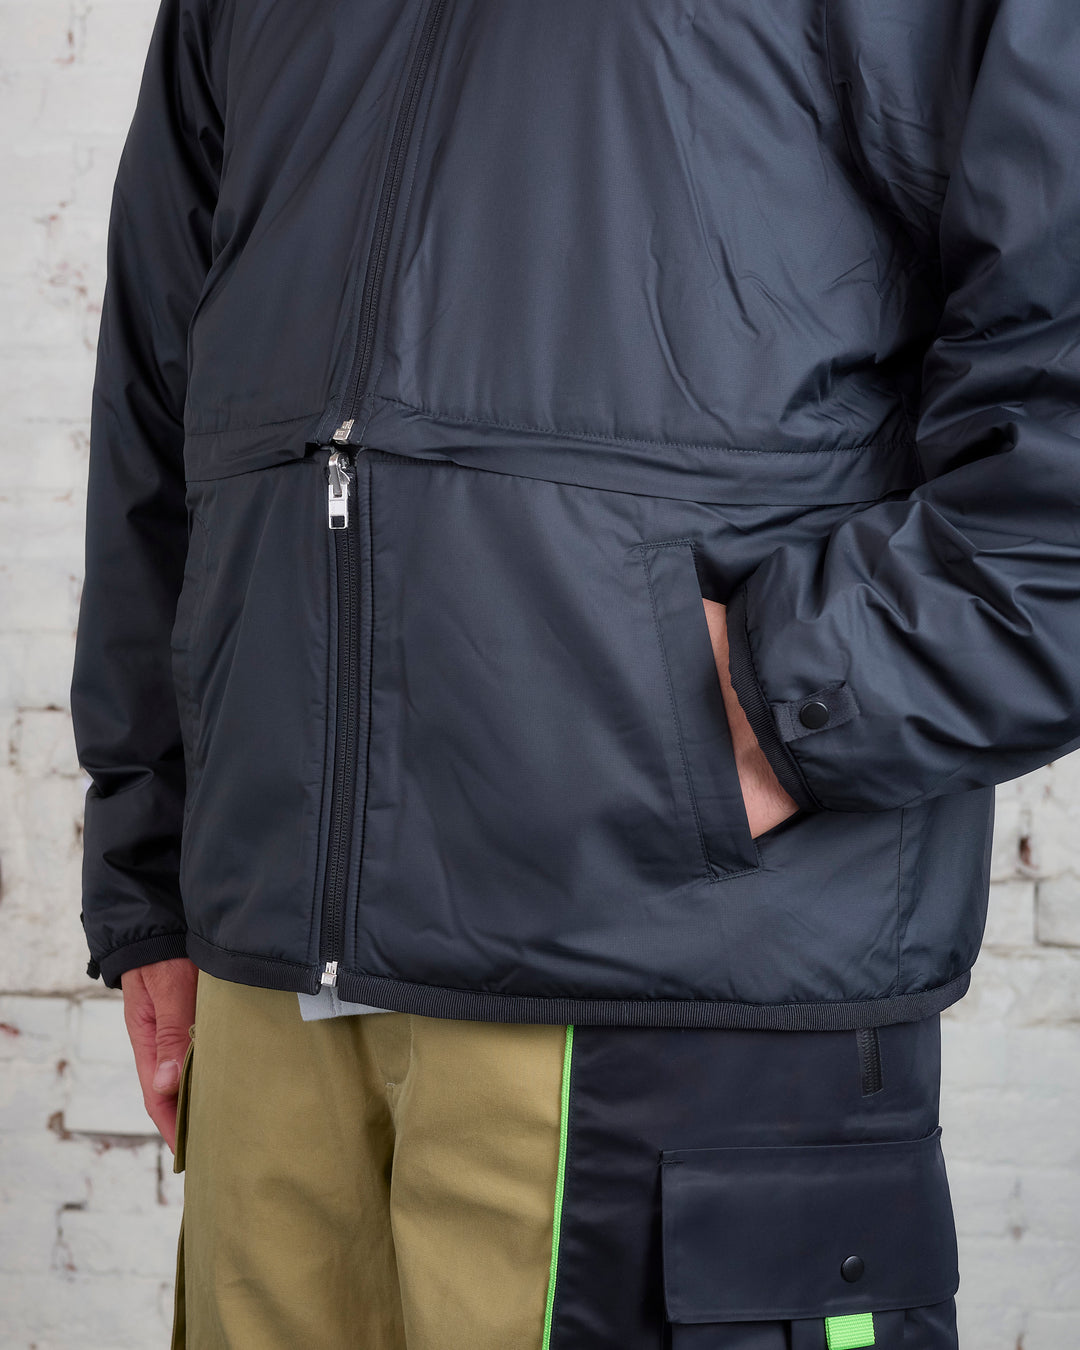 Nike x Feng Chen Wang Unisex Transform Jacket Black / Khaki